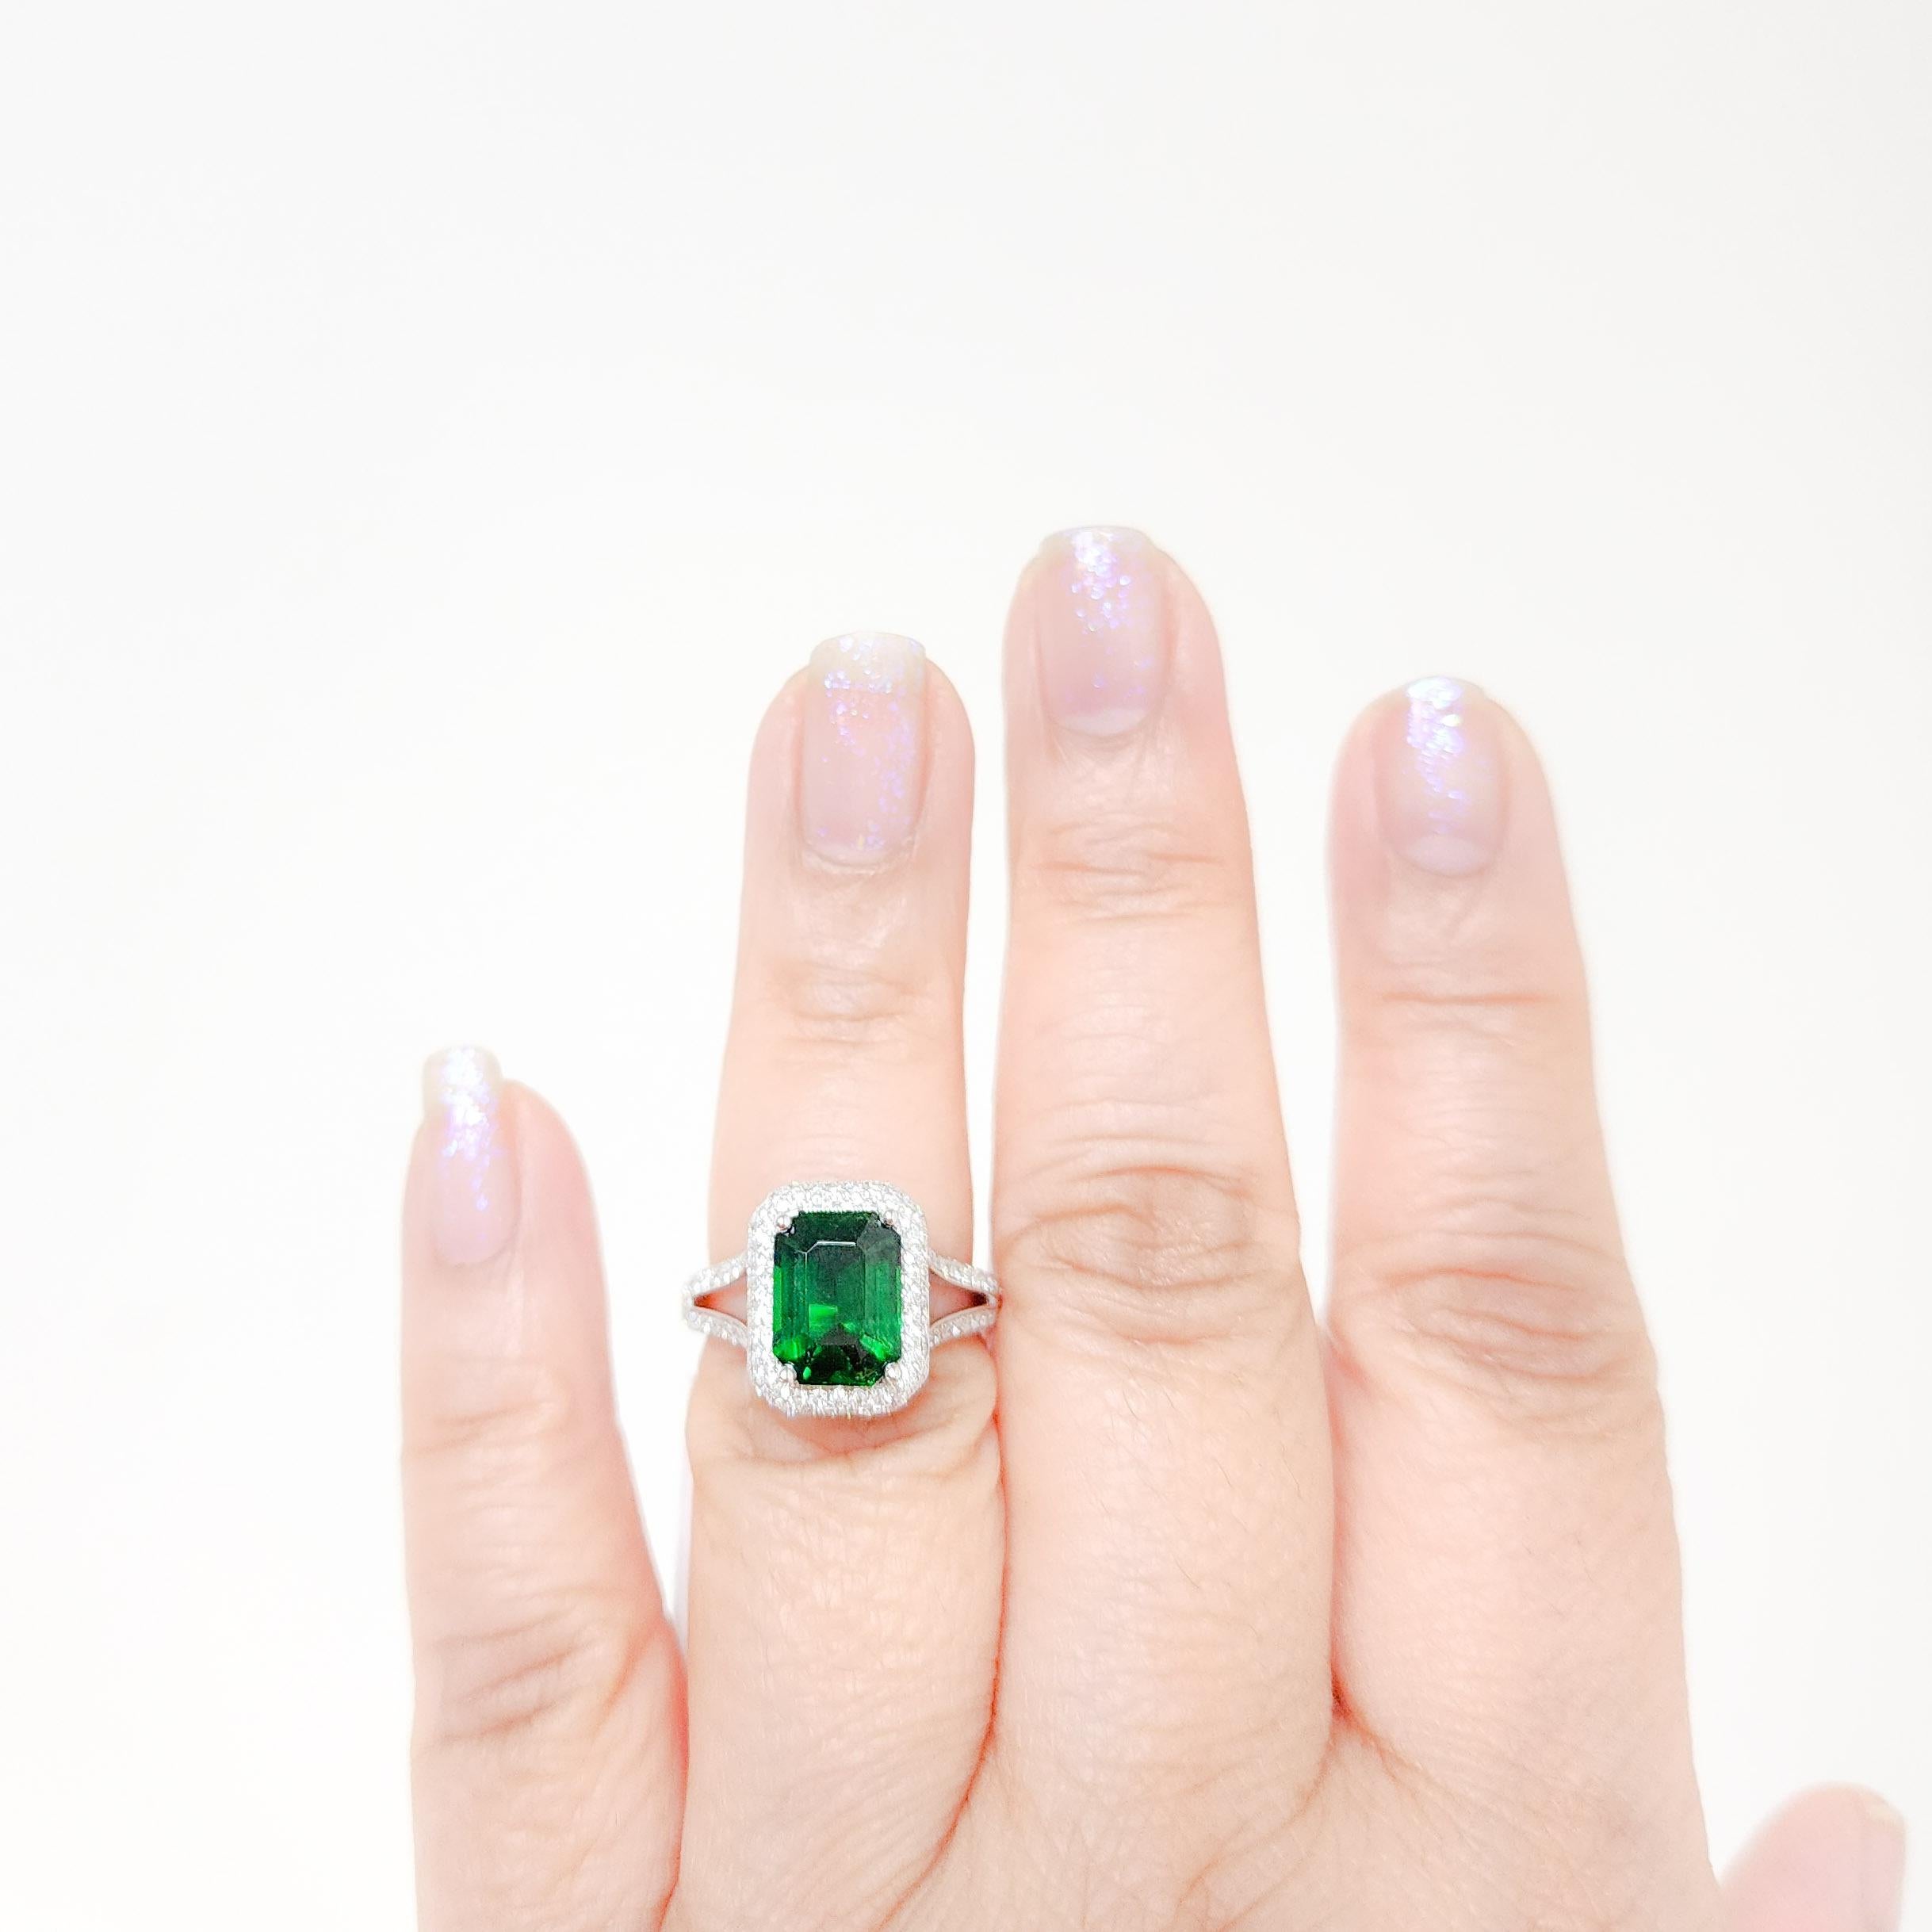 Beautiful bright 4.01 ct. tsavorite garnet emerald cut with 1.23 ct. good quality white diamond rounds.  Handmade in 18k white gold.  Ring size 6.5.